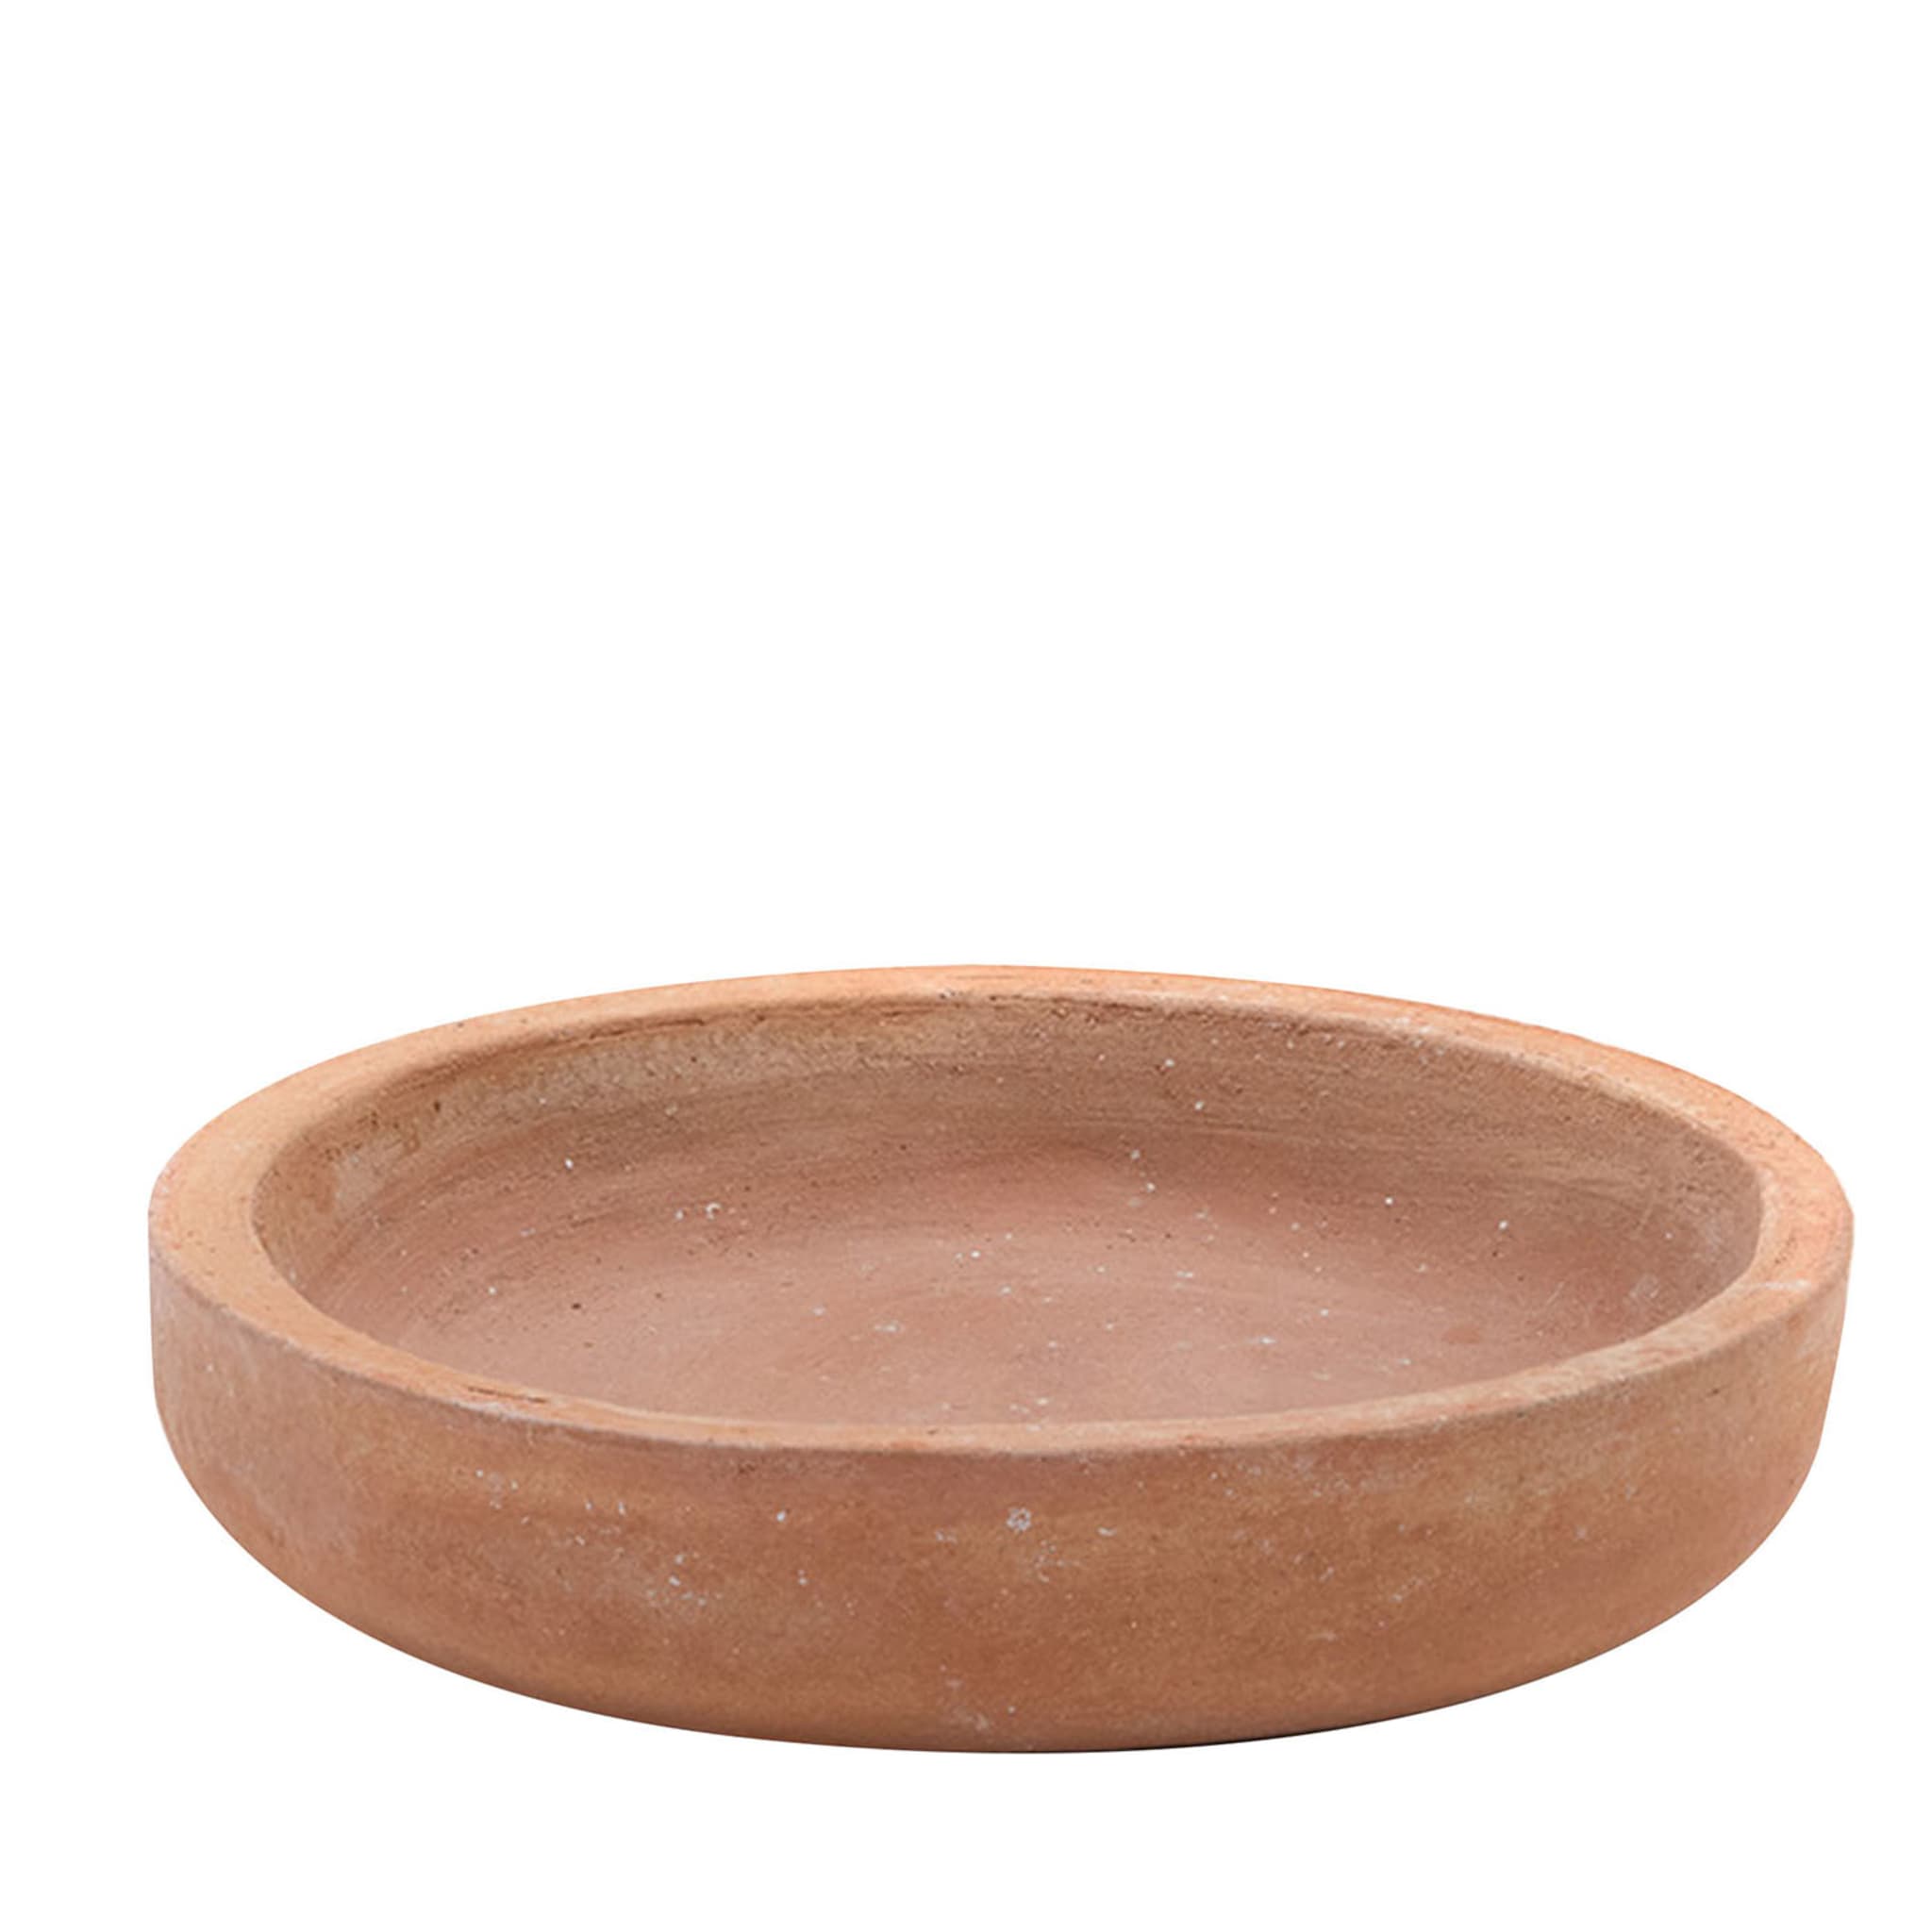 Diogenea - A Tale of Bowls Terracotta Bowl - Main view